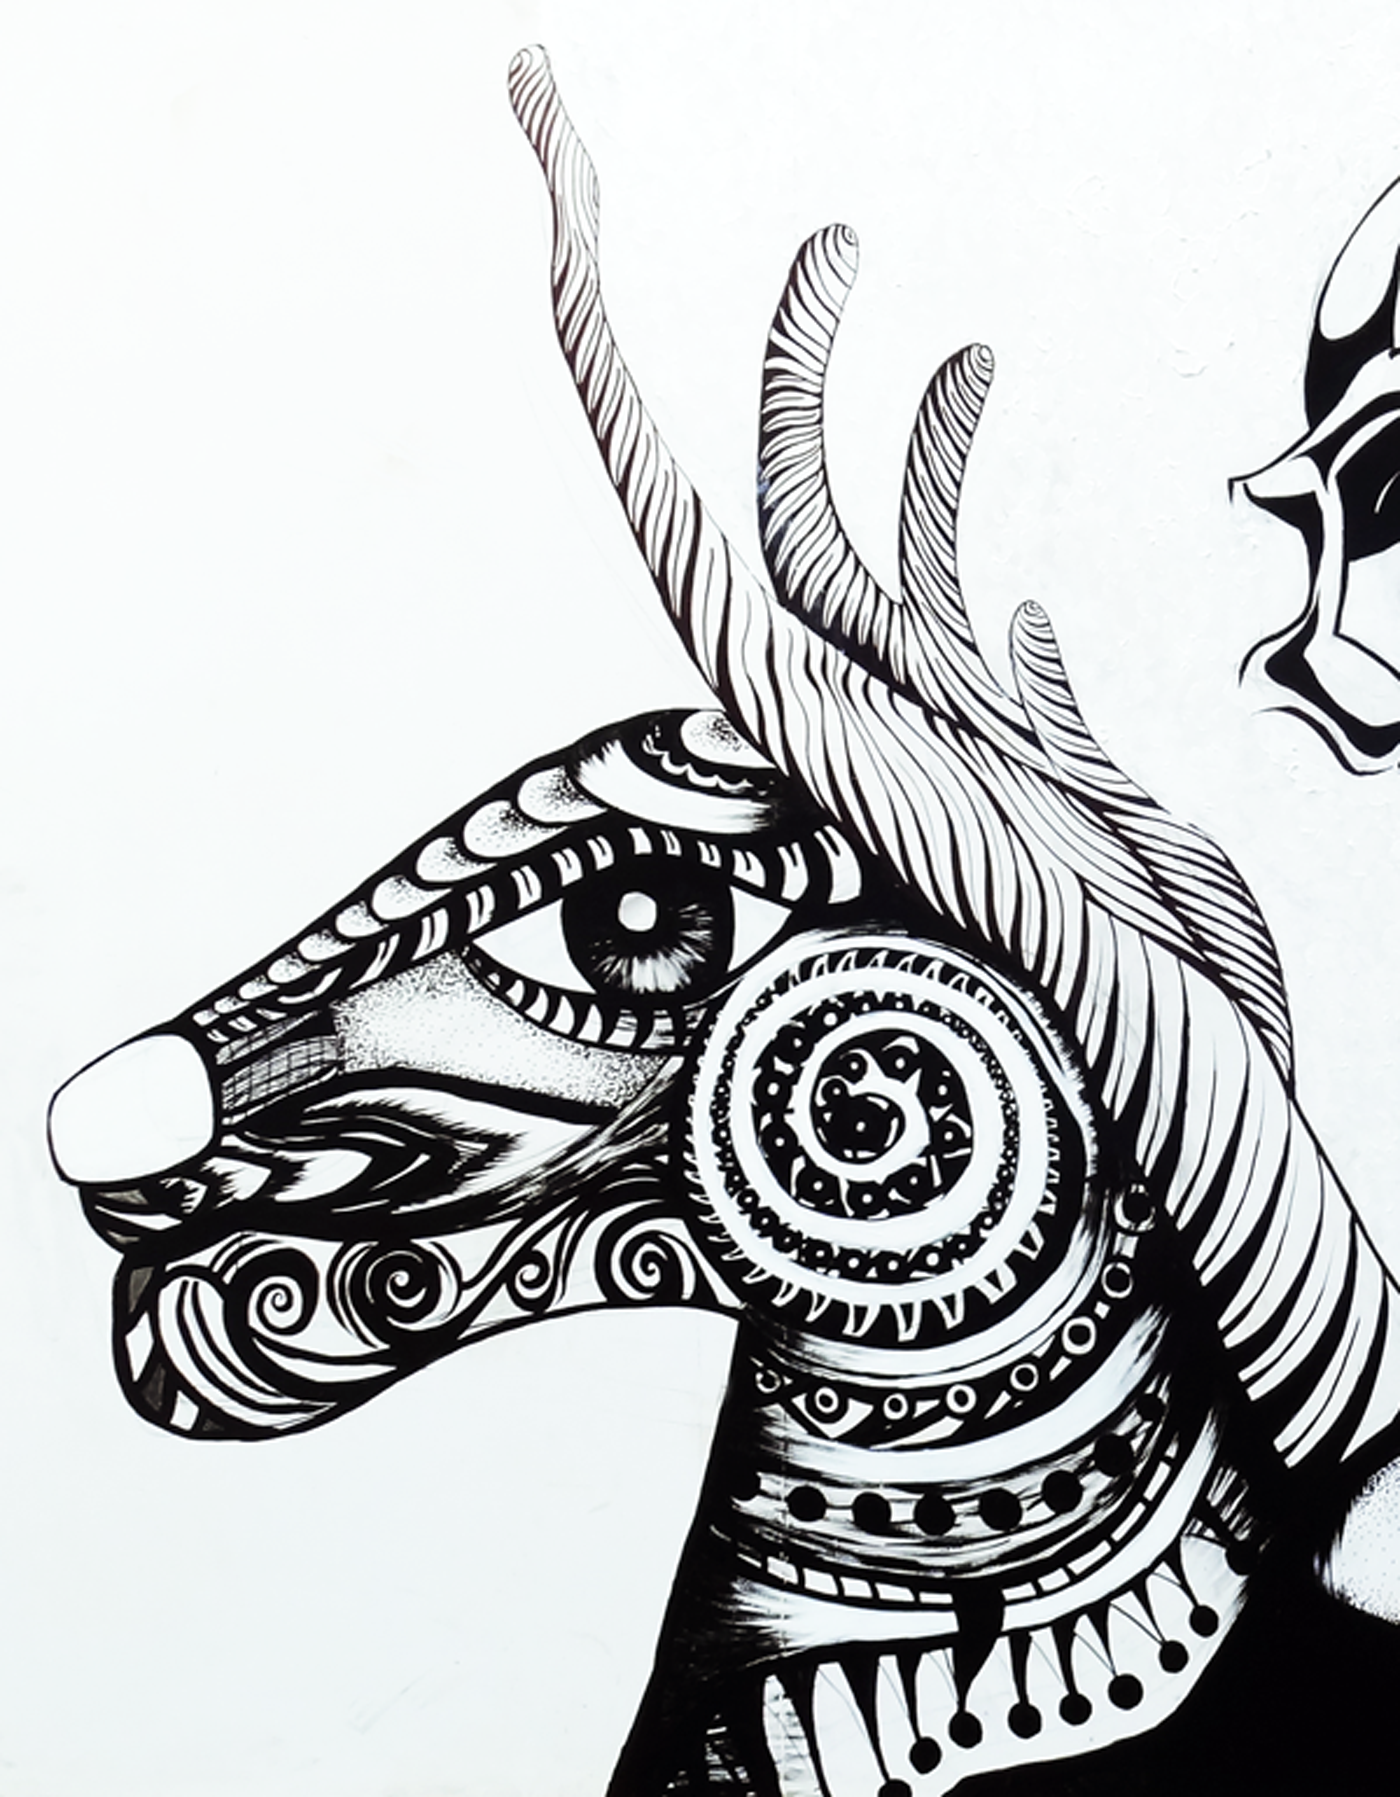 wall wall graphic wall art tattoo Tattoo Studio design acrylic monochrome black White eyes horns eagle stag art